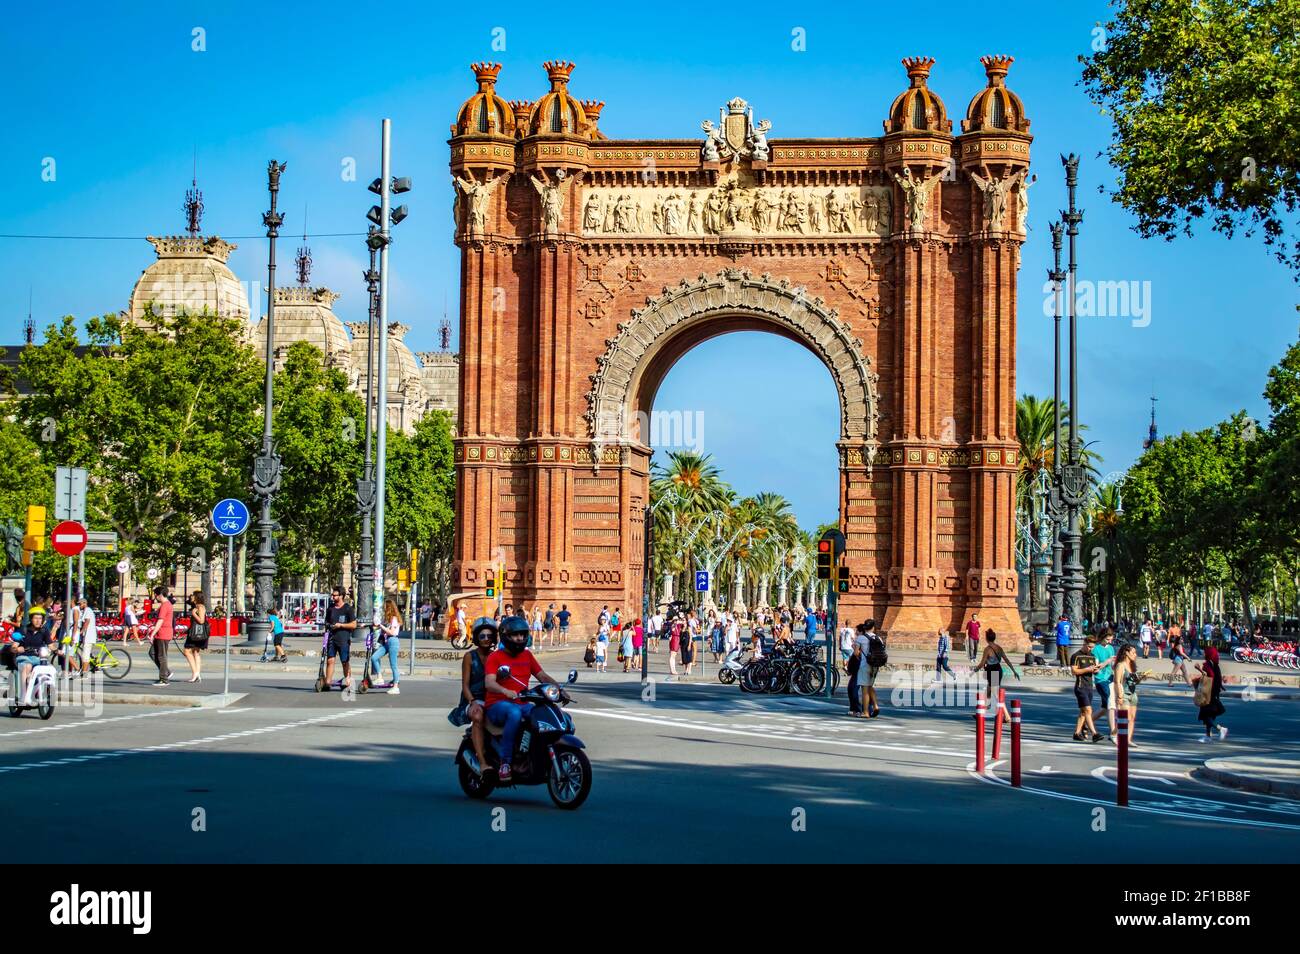 Barcelona, Spain - July 25, 2019: Arc de Triomf or Triumphal Arch of Barcelona in Catalonia, Spain Stock Photo